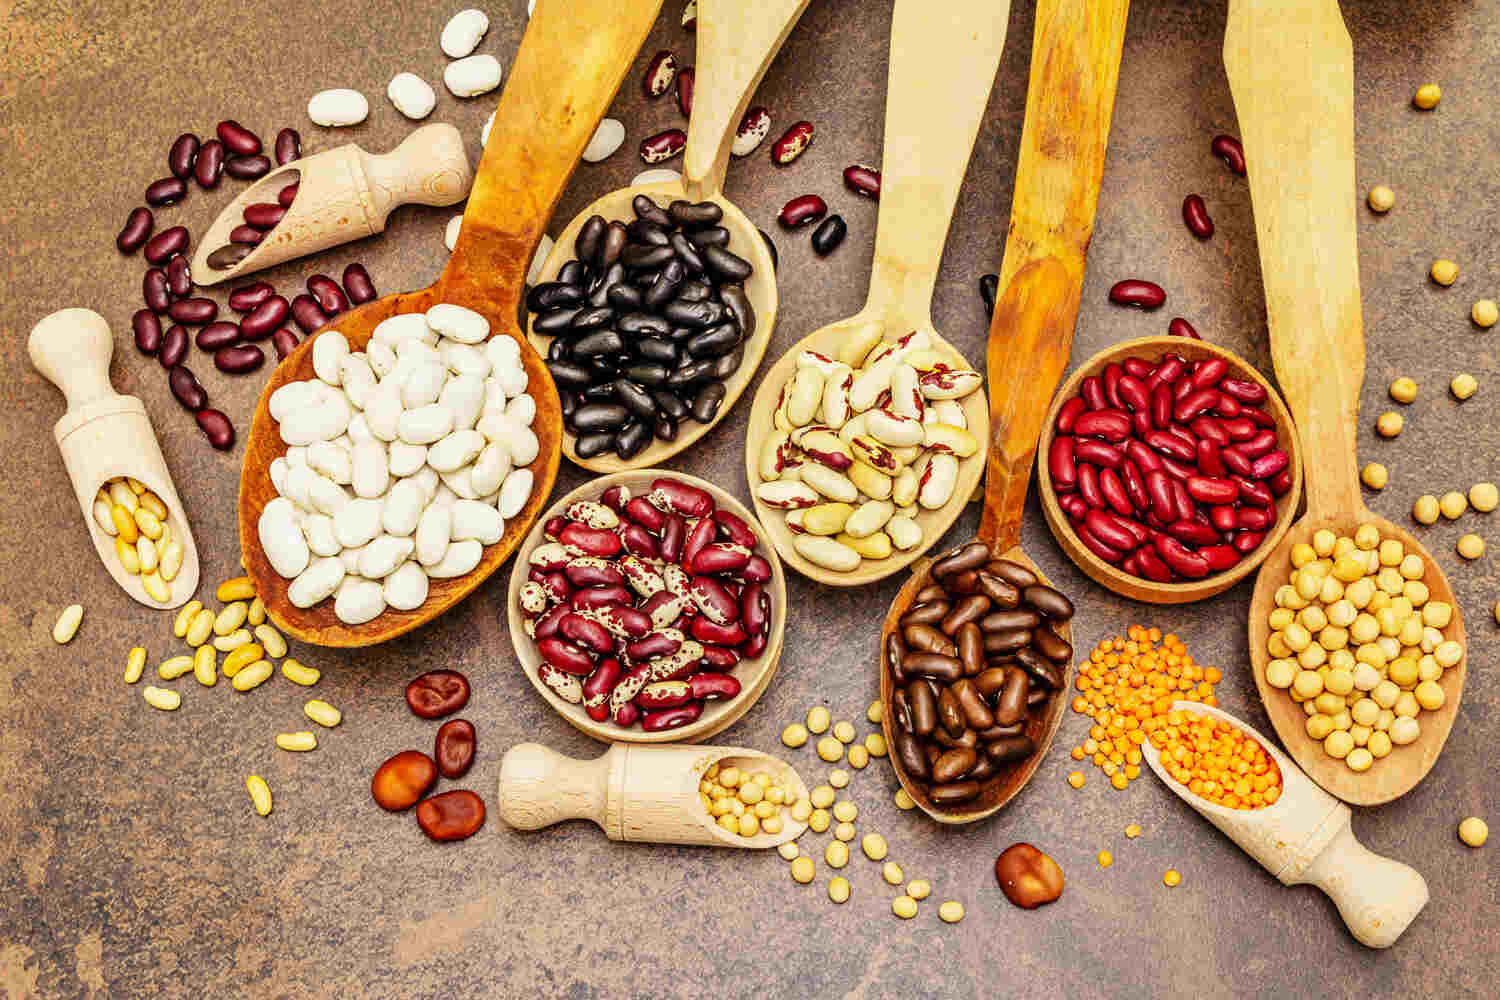 Beans and lentils help prevent kidney stones